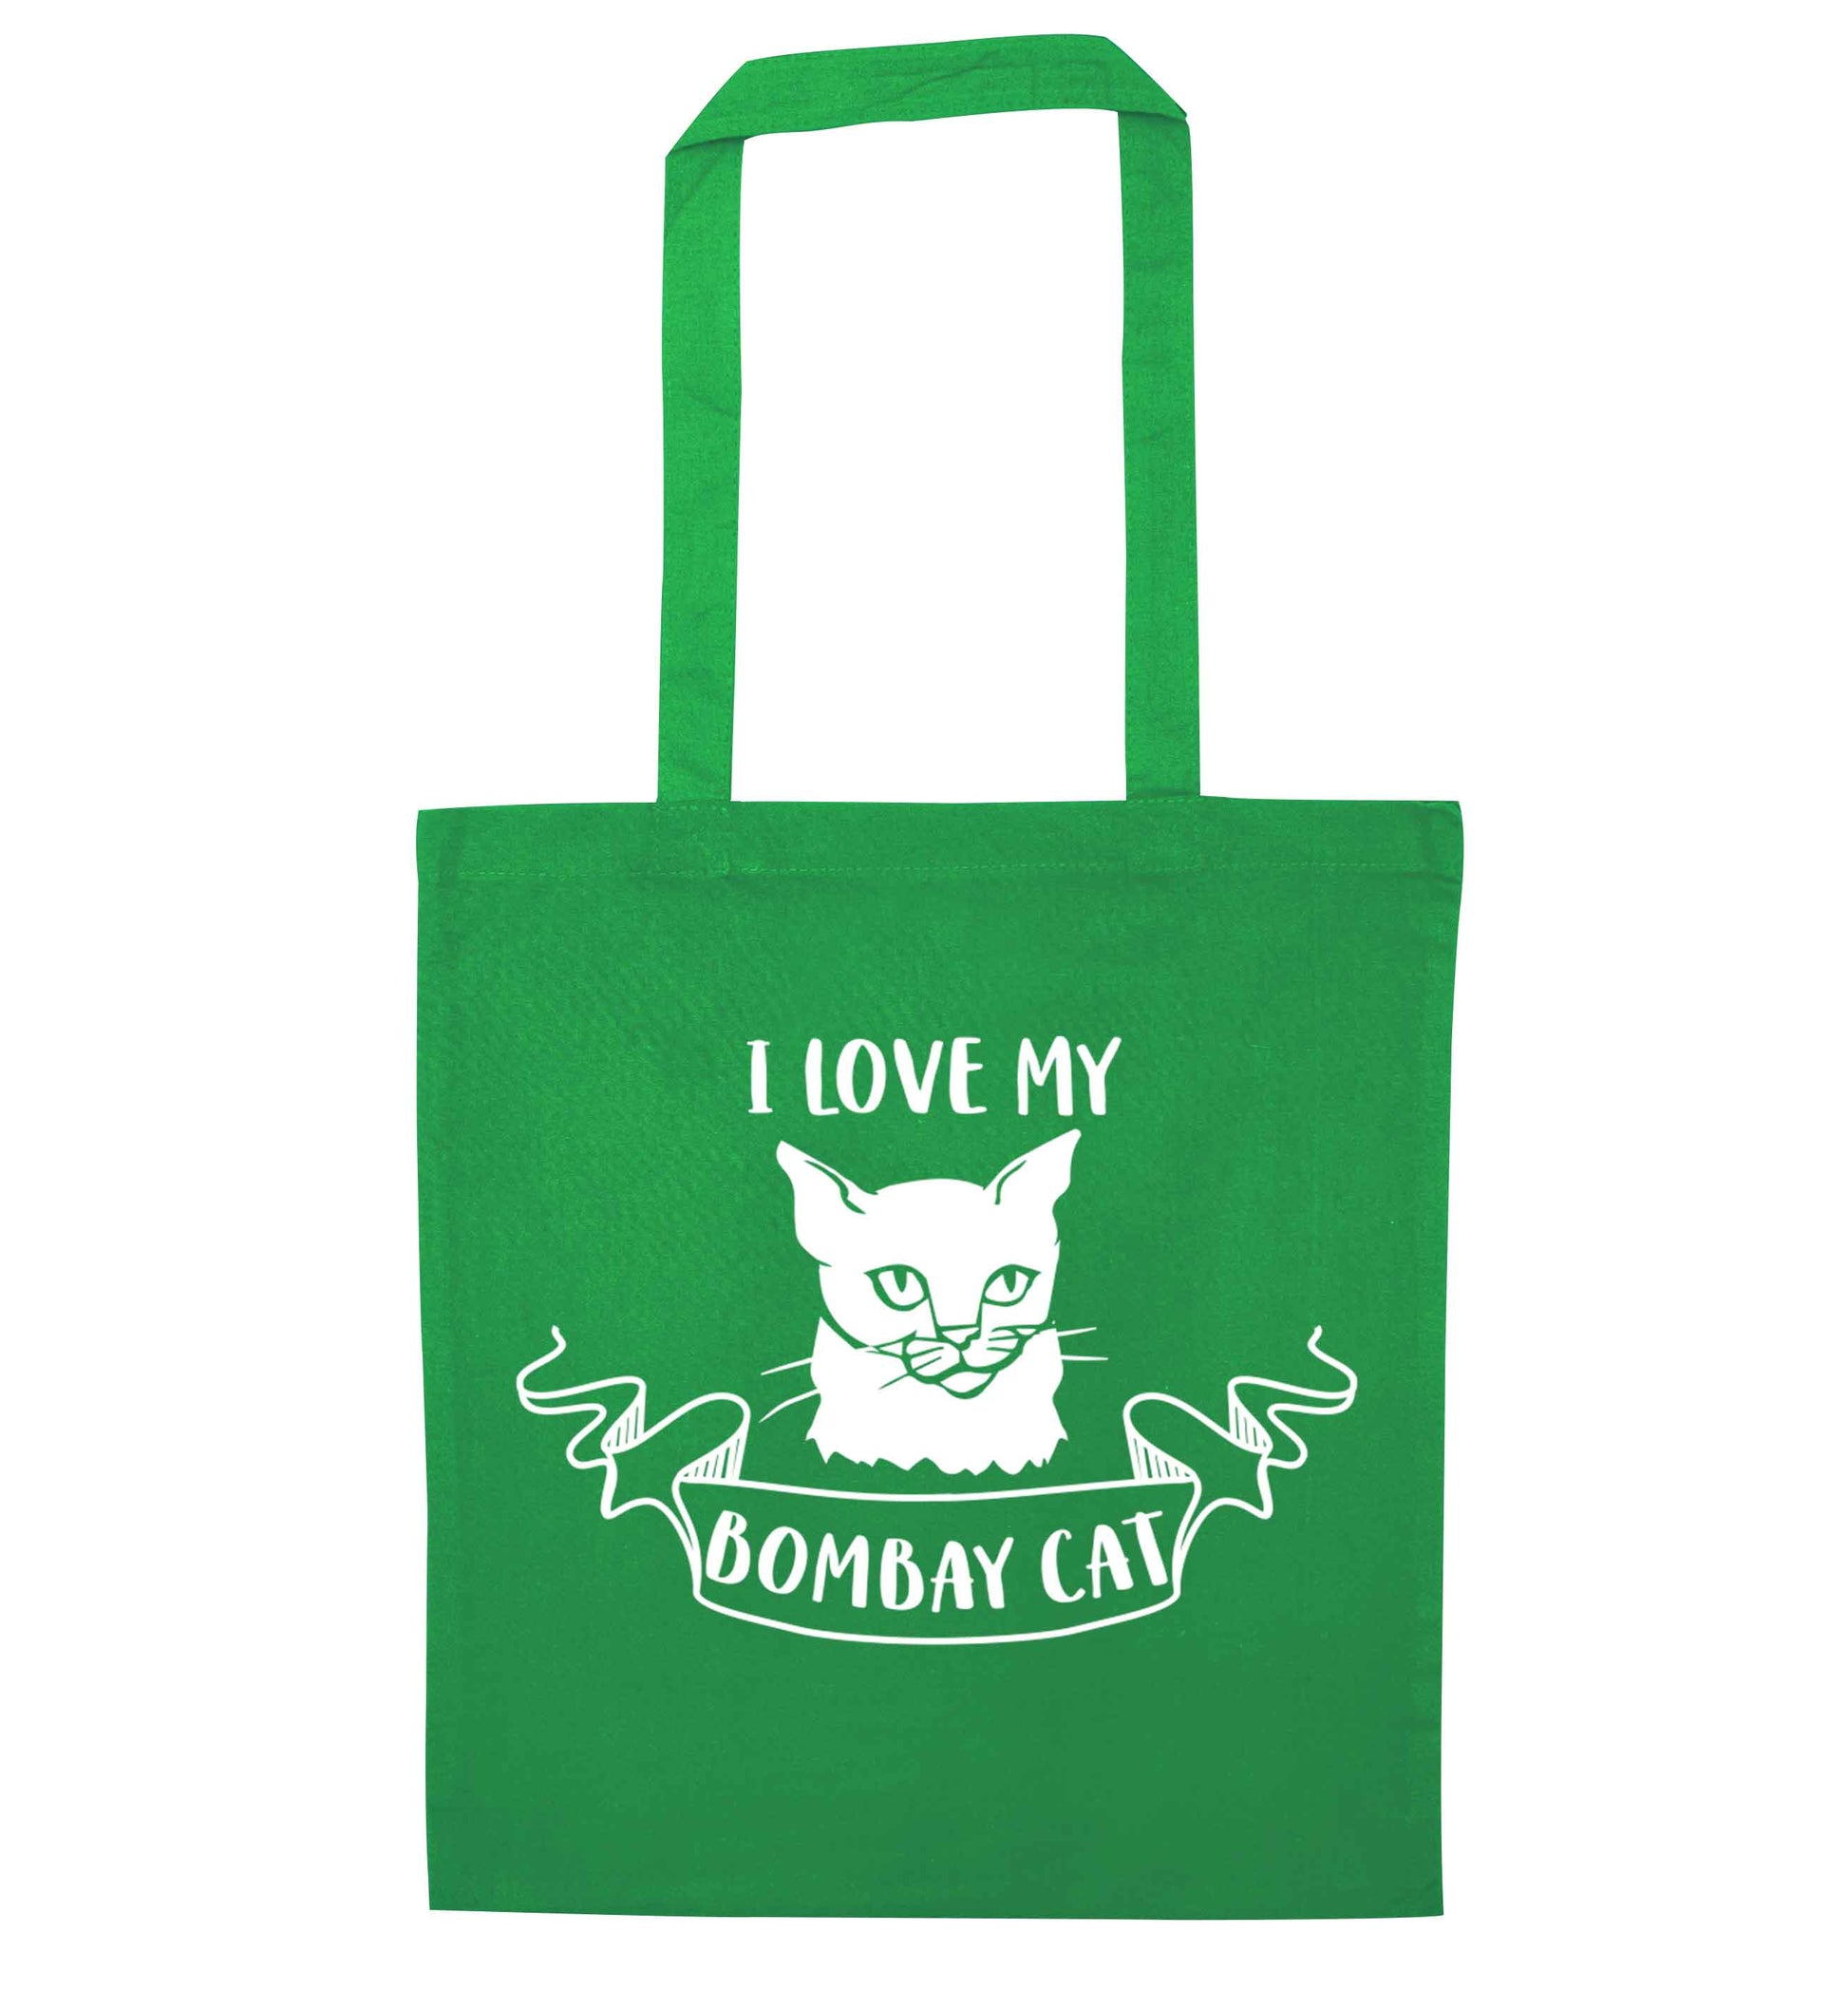 I love my bombay cat green tote bag